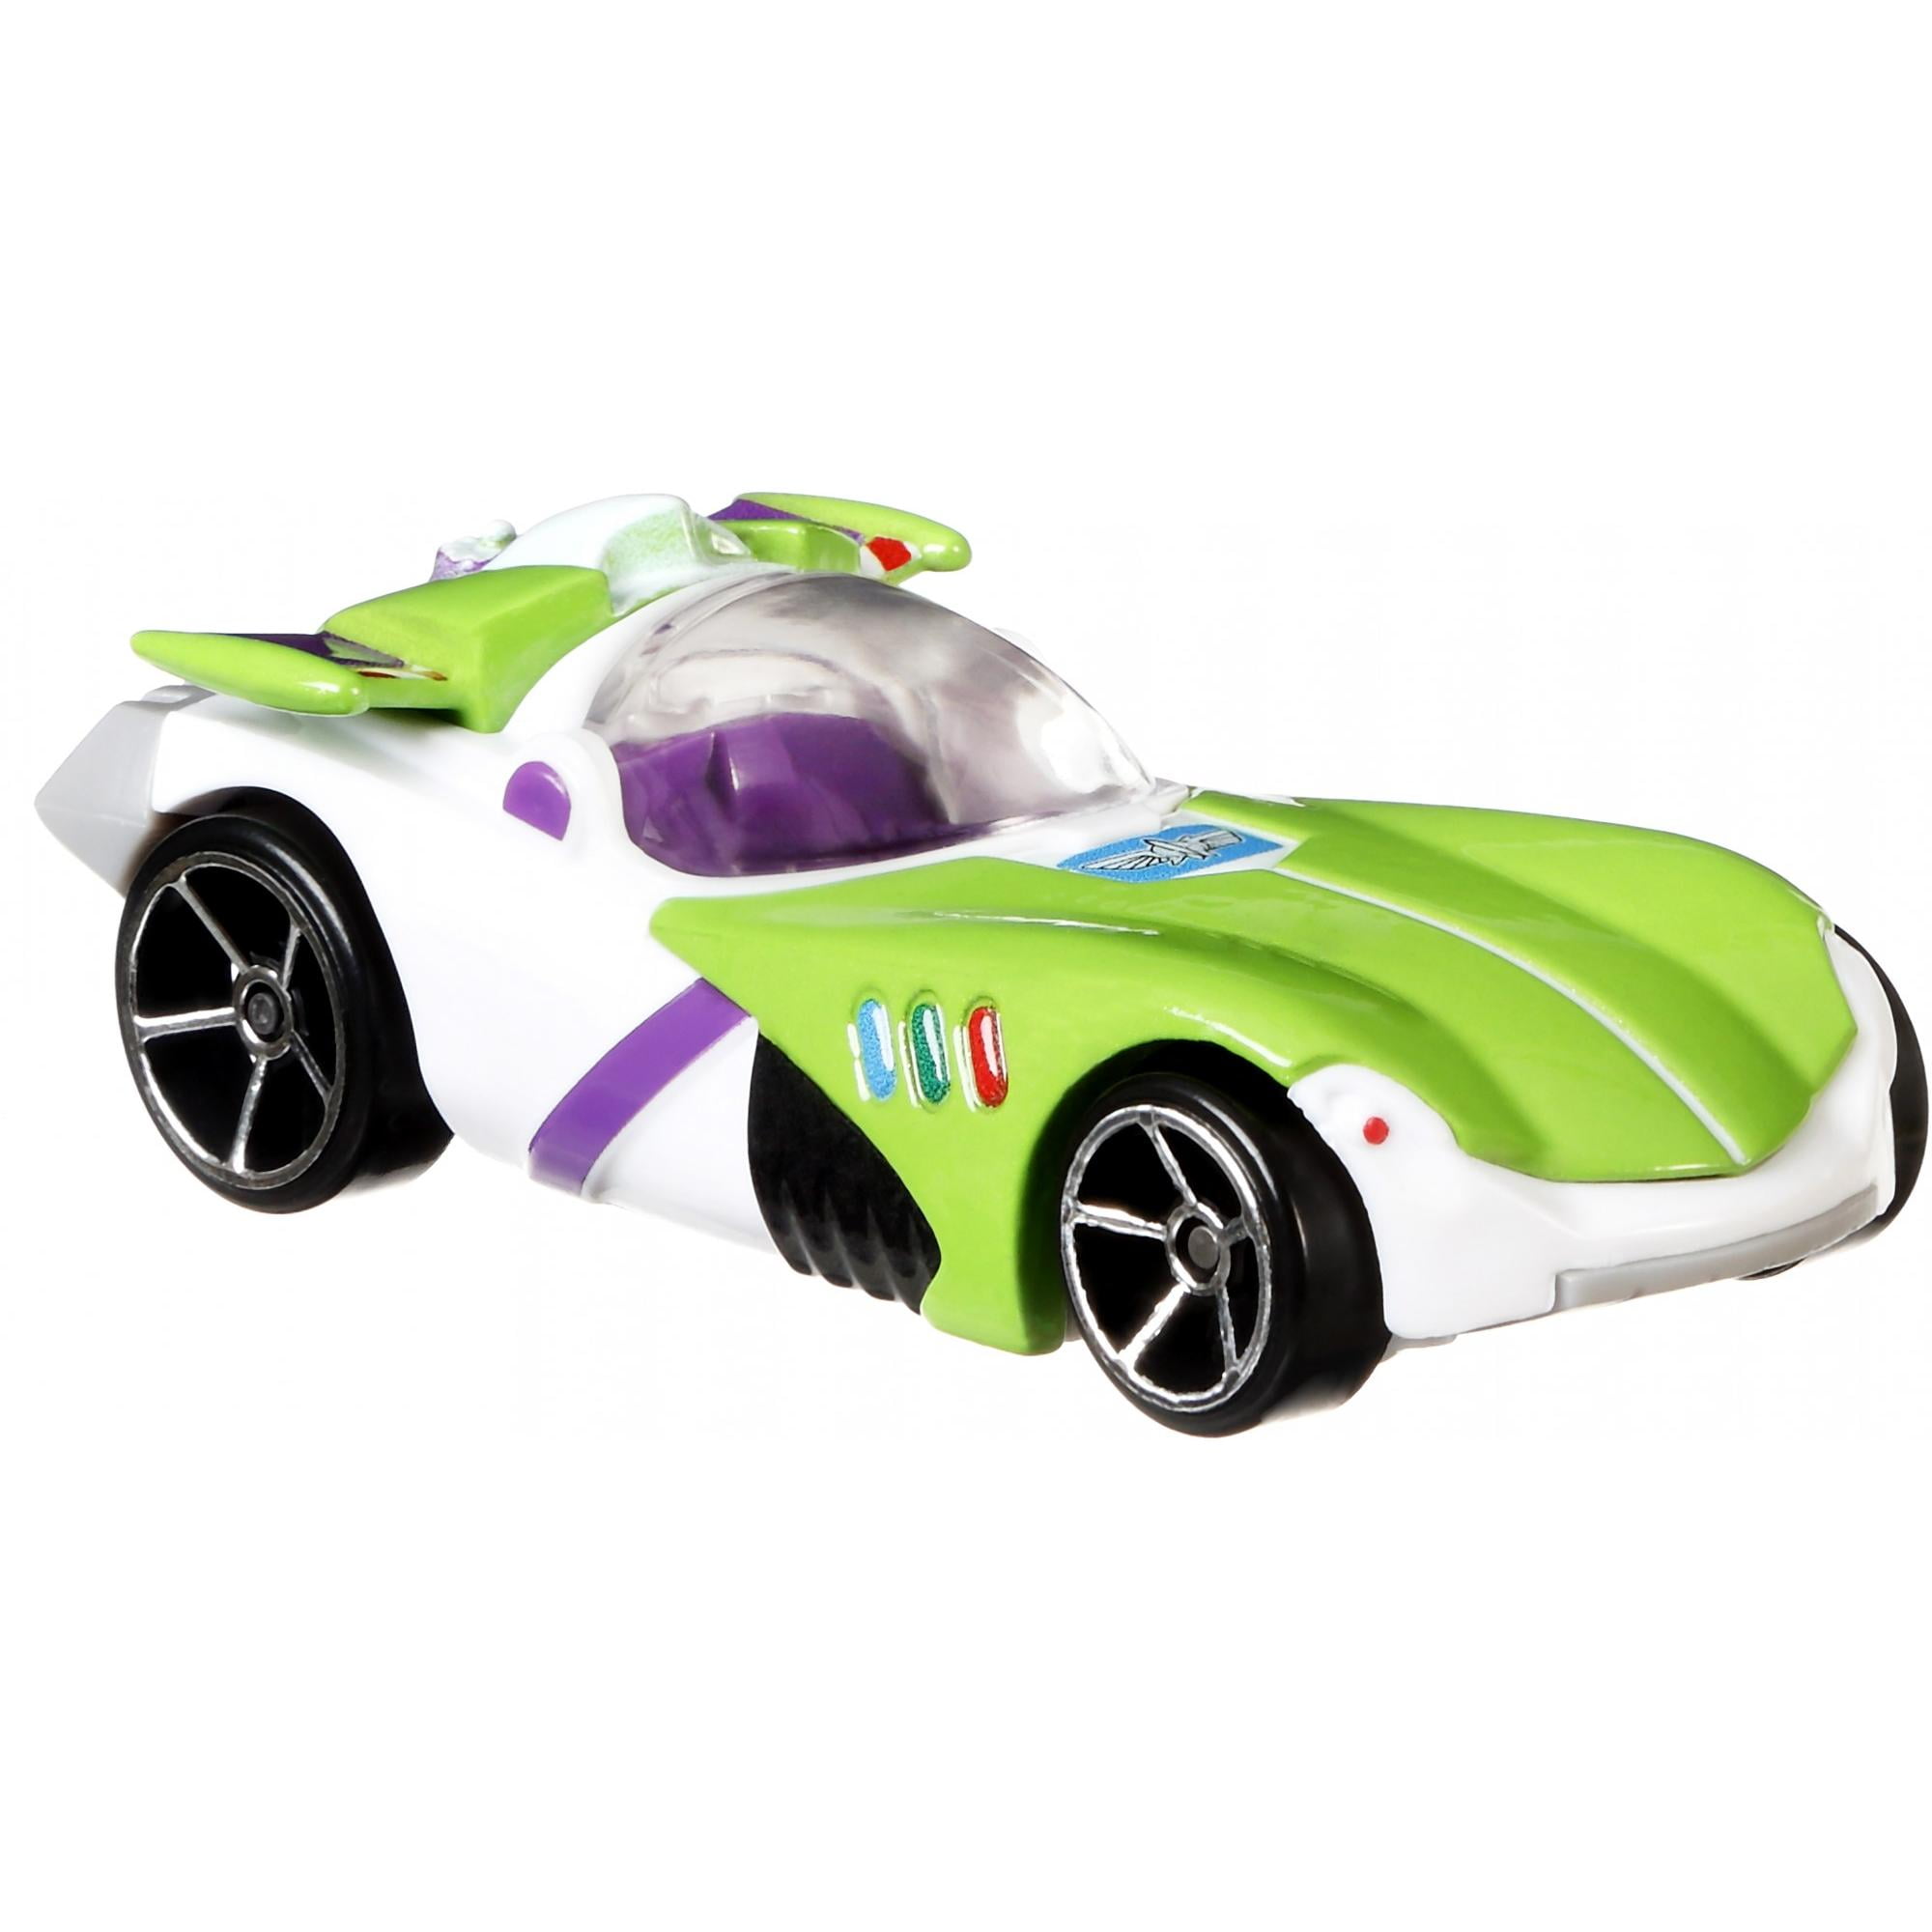 Toy Story 4 Hot Wheels Alien personnage Diecast Vehicle Voiture Jouet 3/8